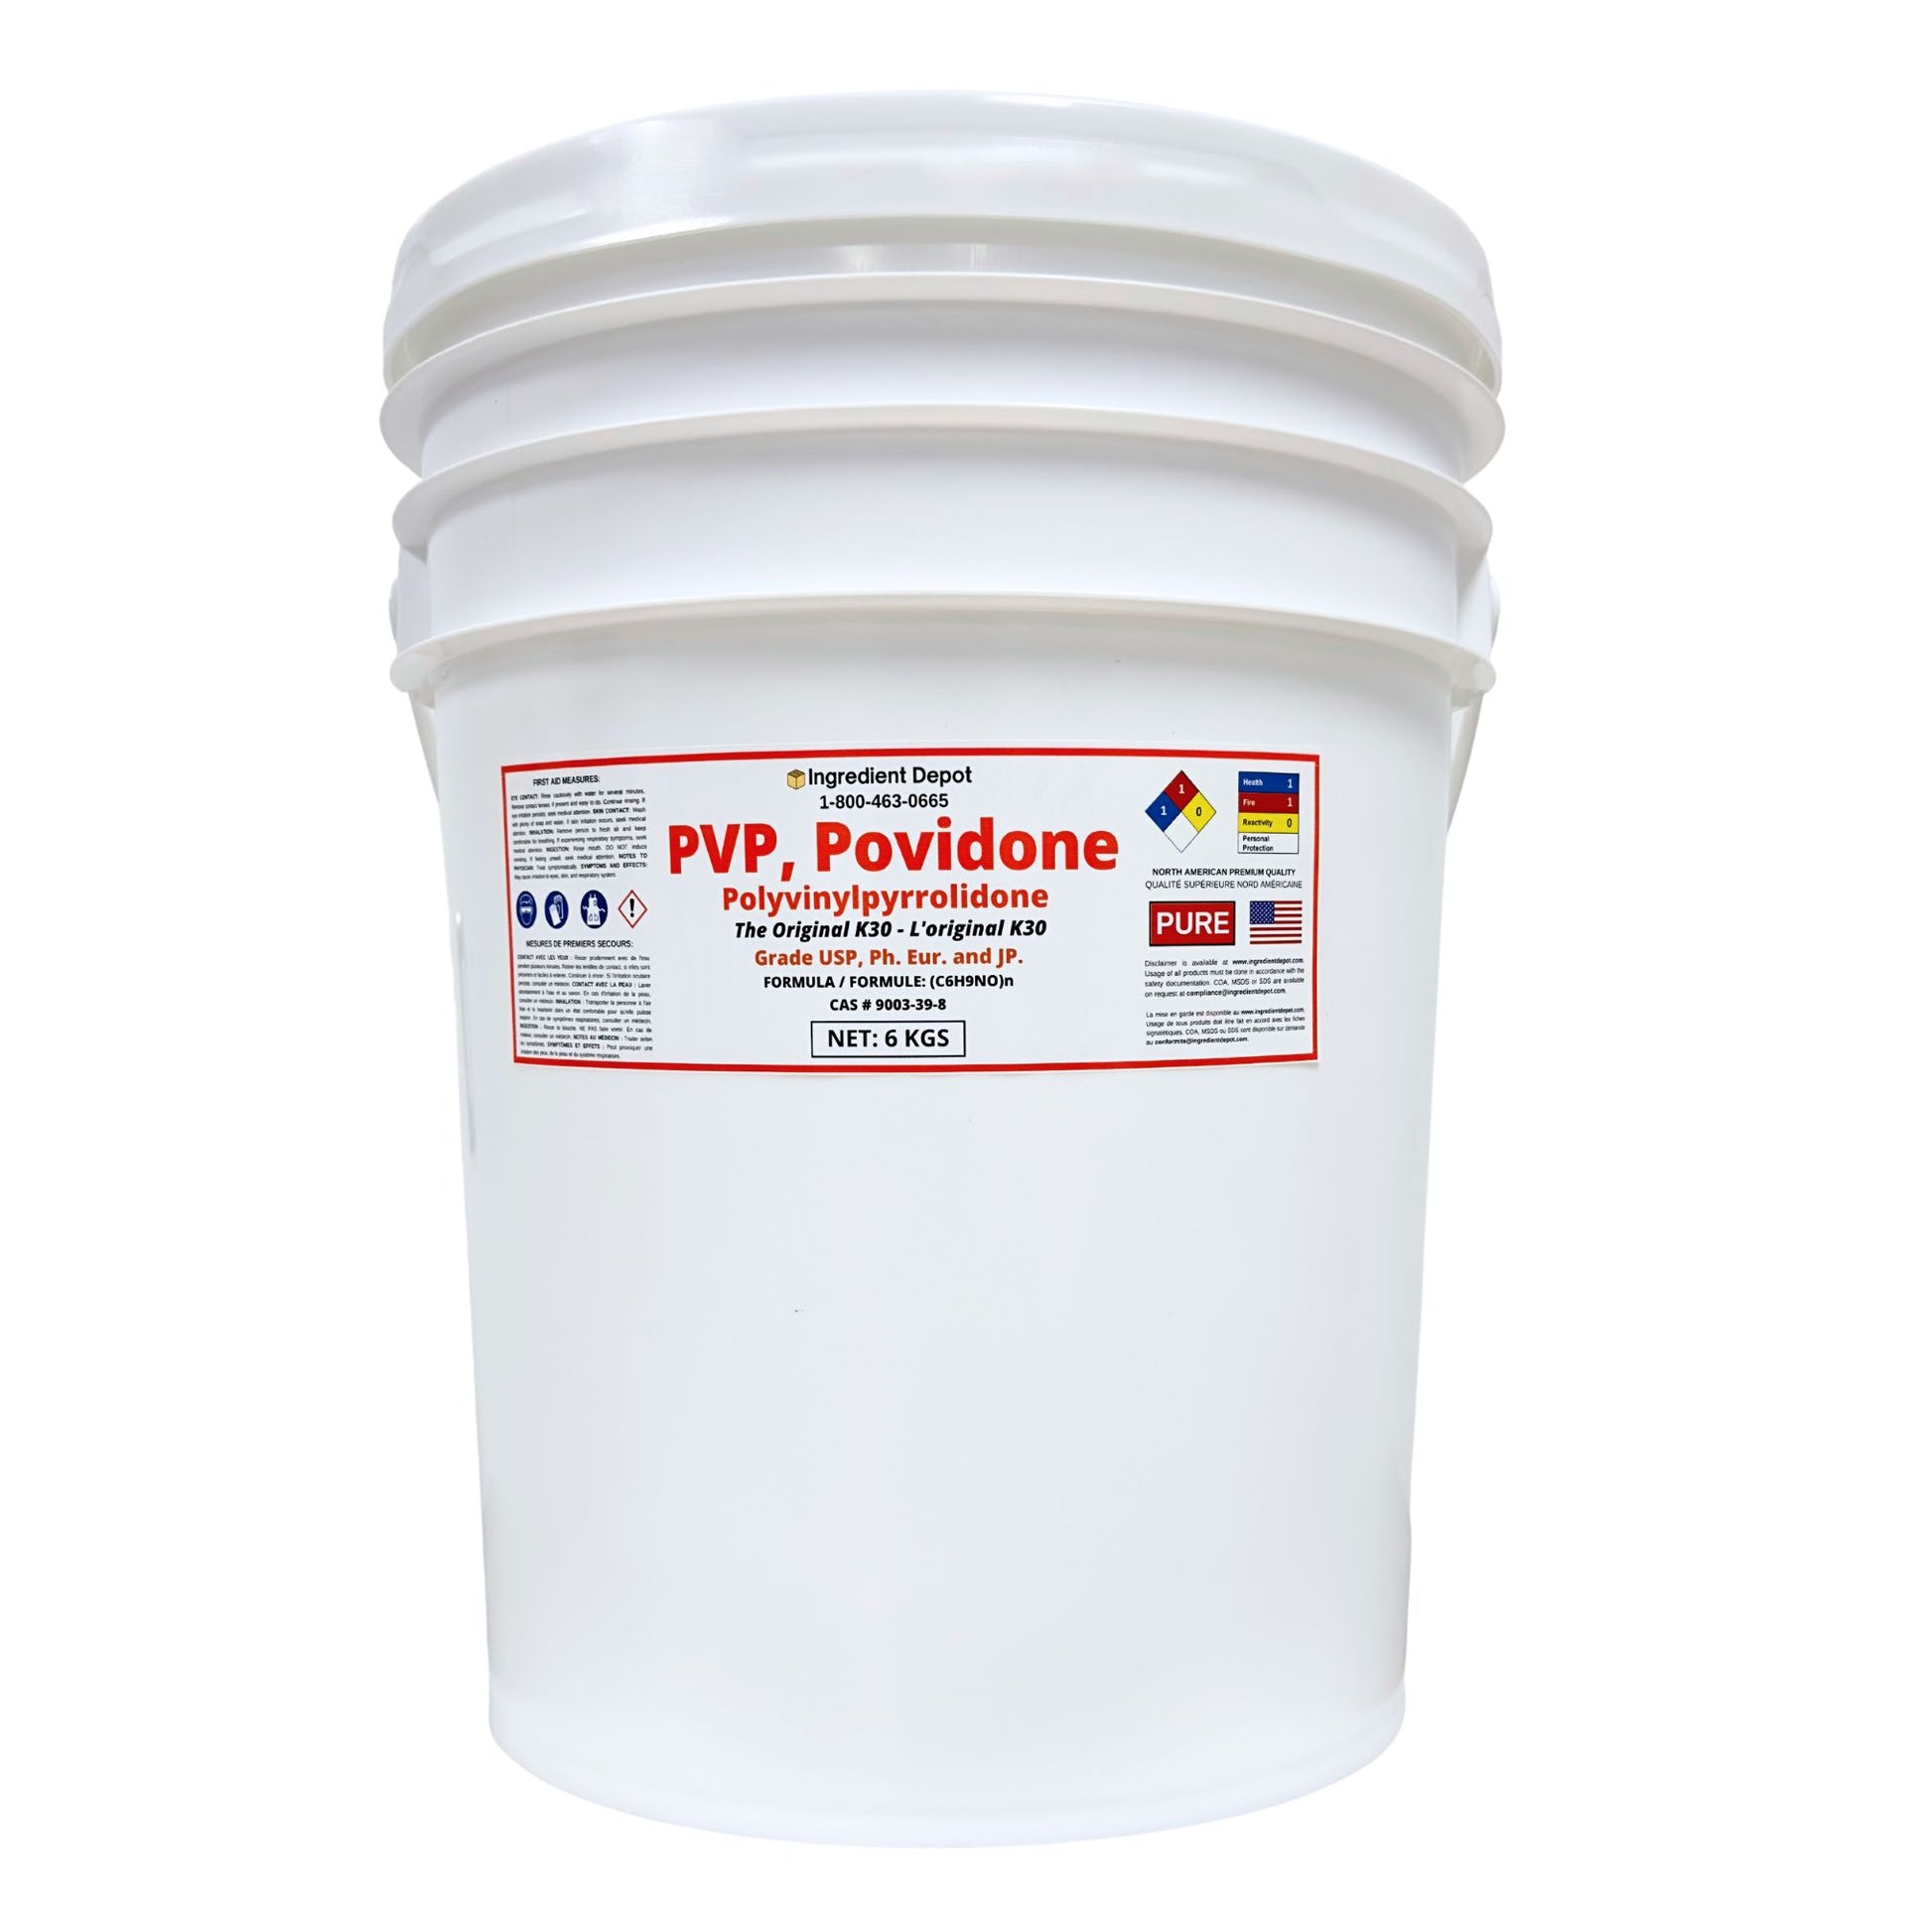 PVP Original K30, Povidone, Polyvinylpyrrolidone 6 kgs